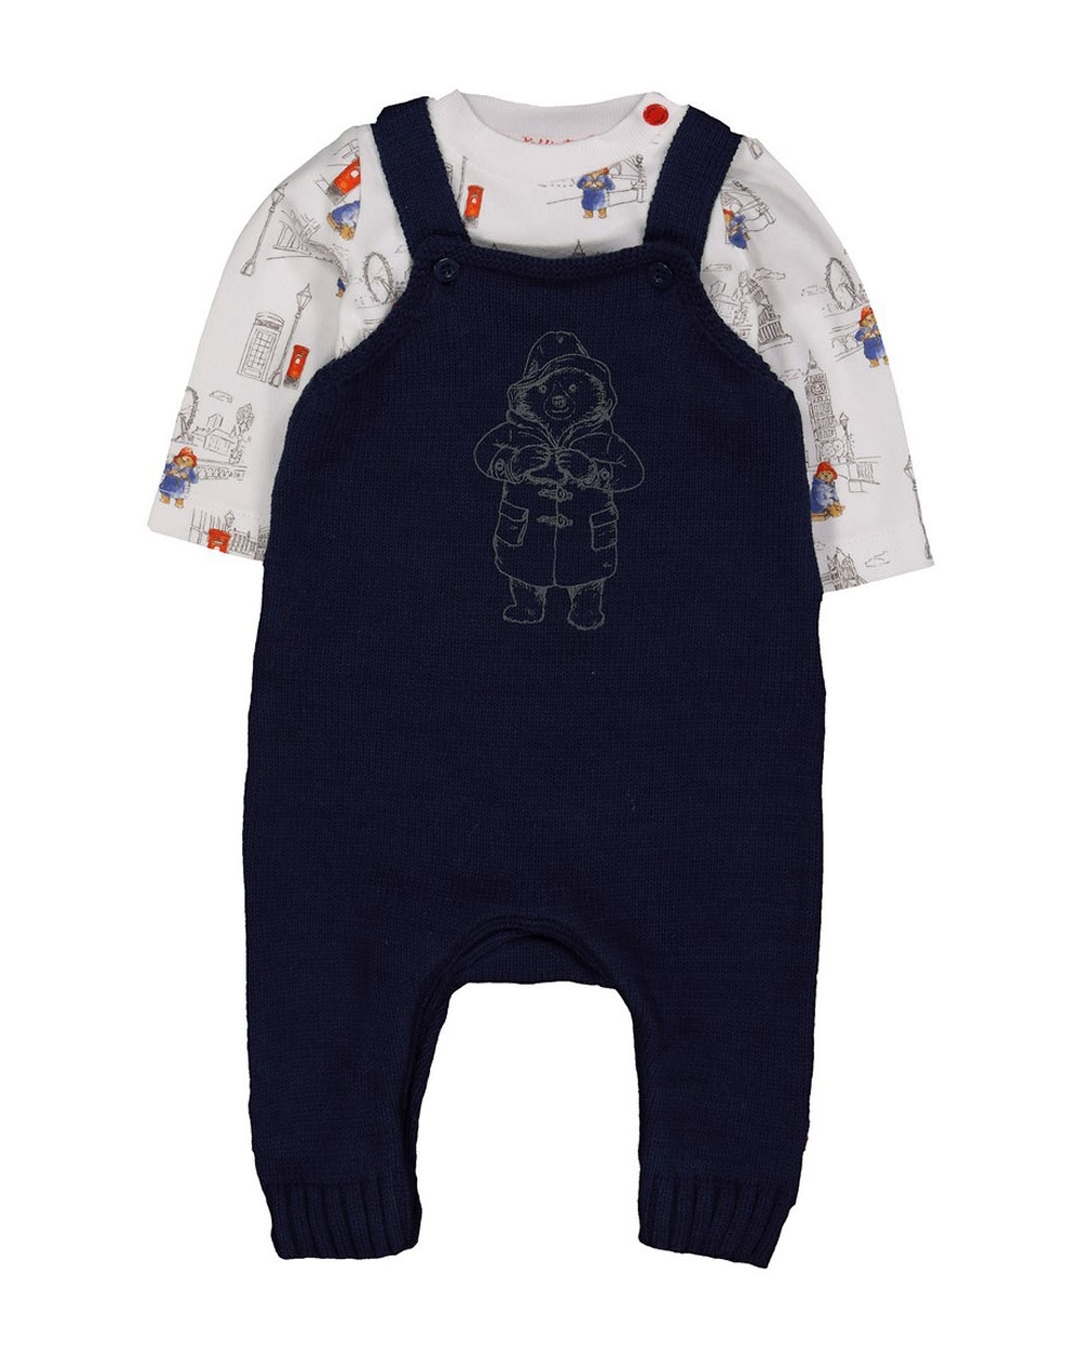 Honest Baby Clothing Baby Boy or Girl Gender Neutral Organic Cotton Hittin  the Town Gift Set, 20 Piece (Newborn-6 Months) - Walmart.com